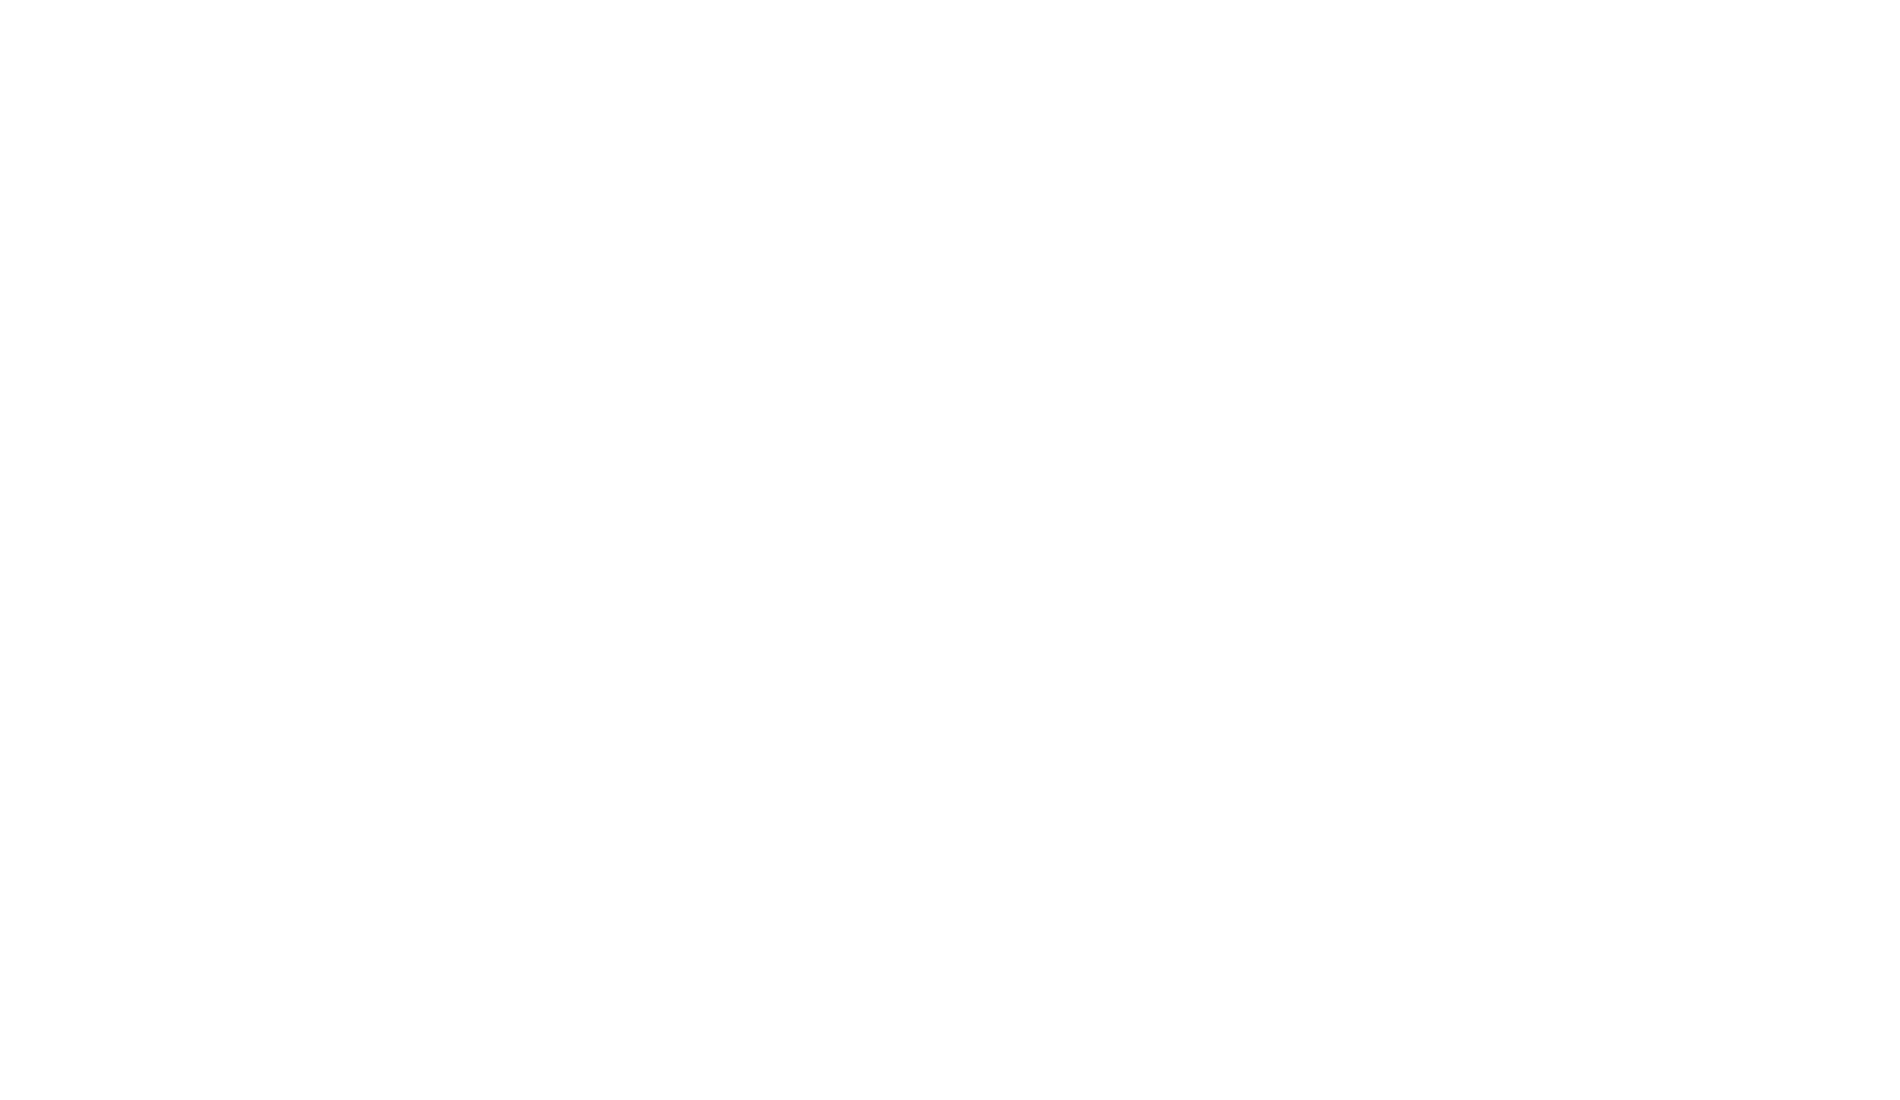 Les fabricants - logo client grdf